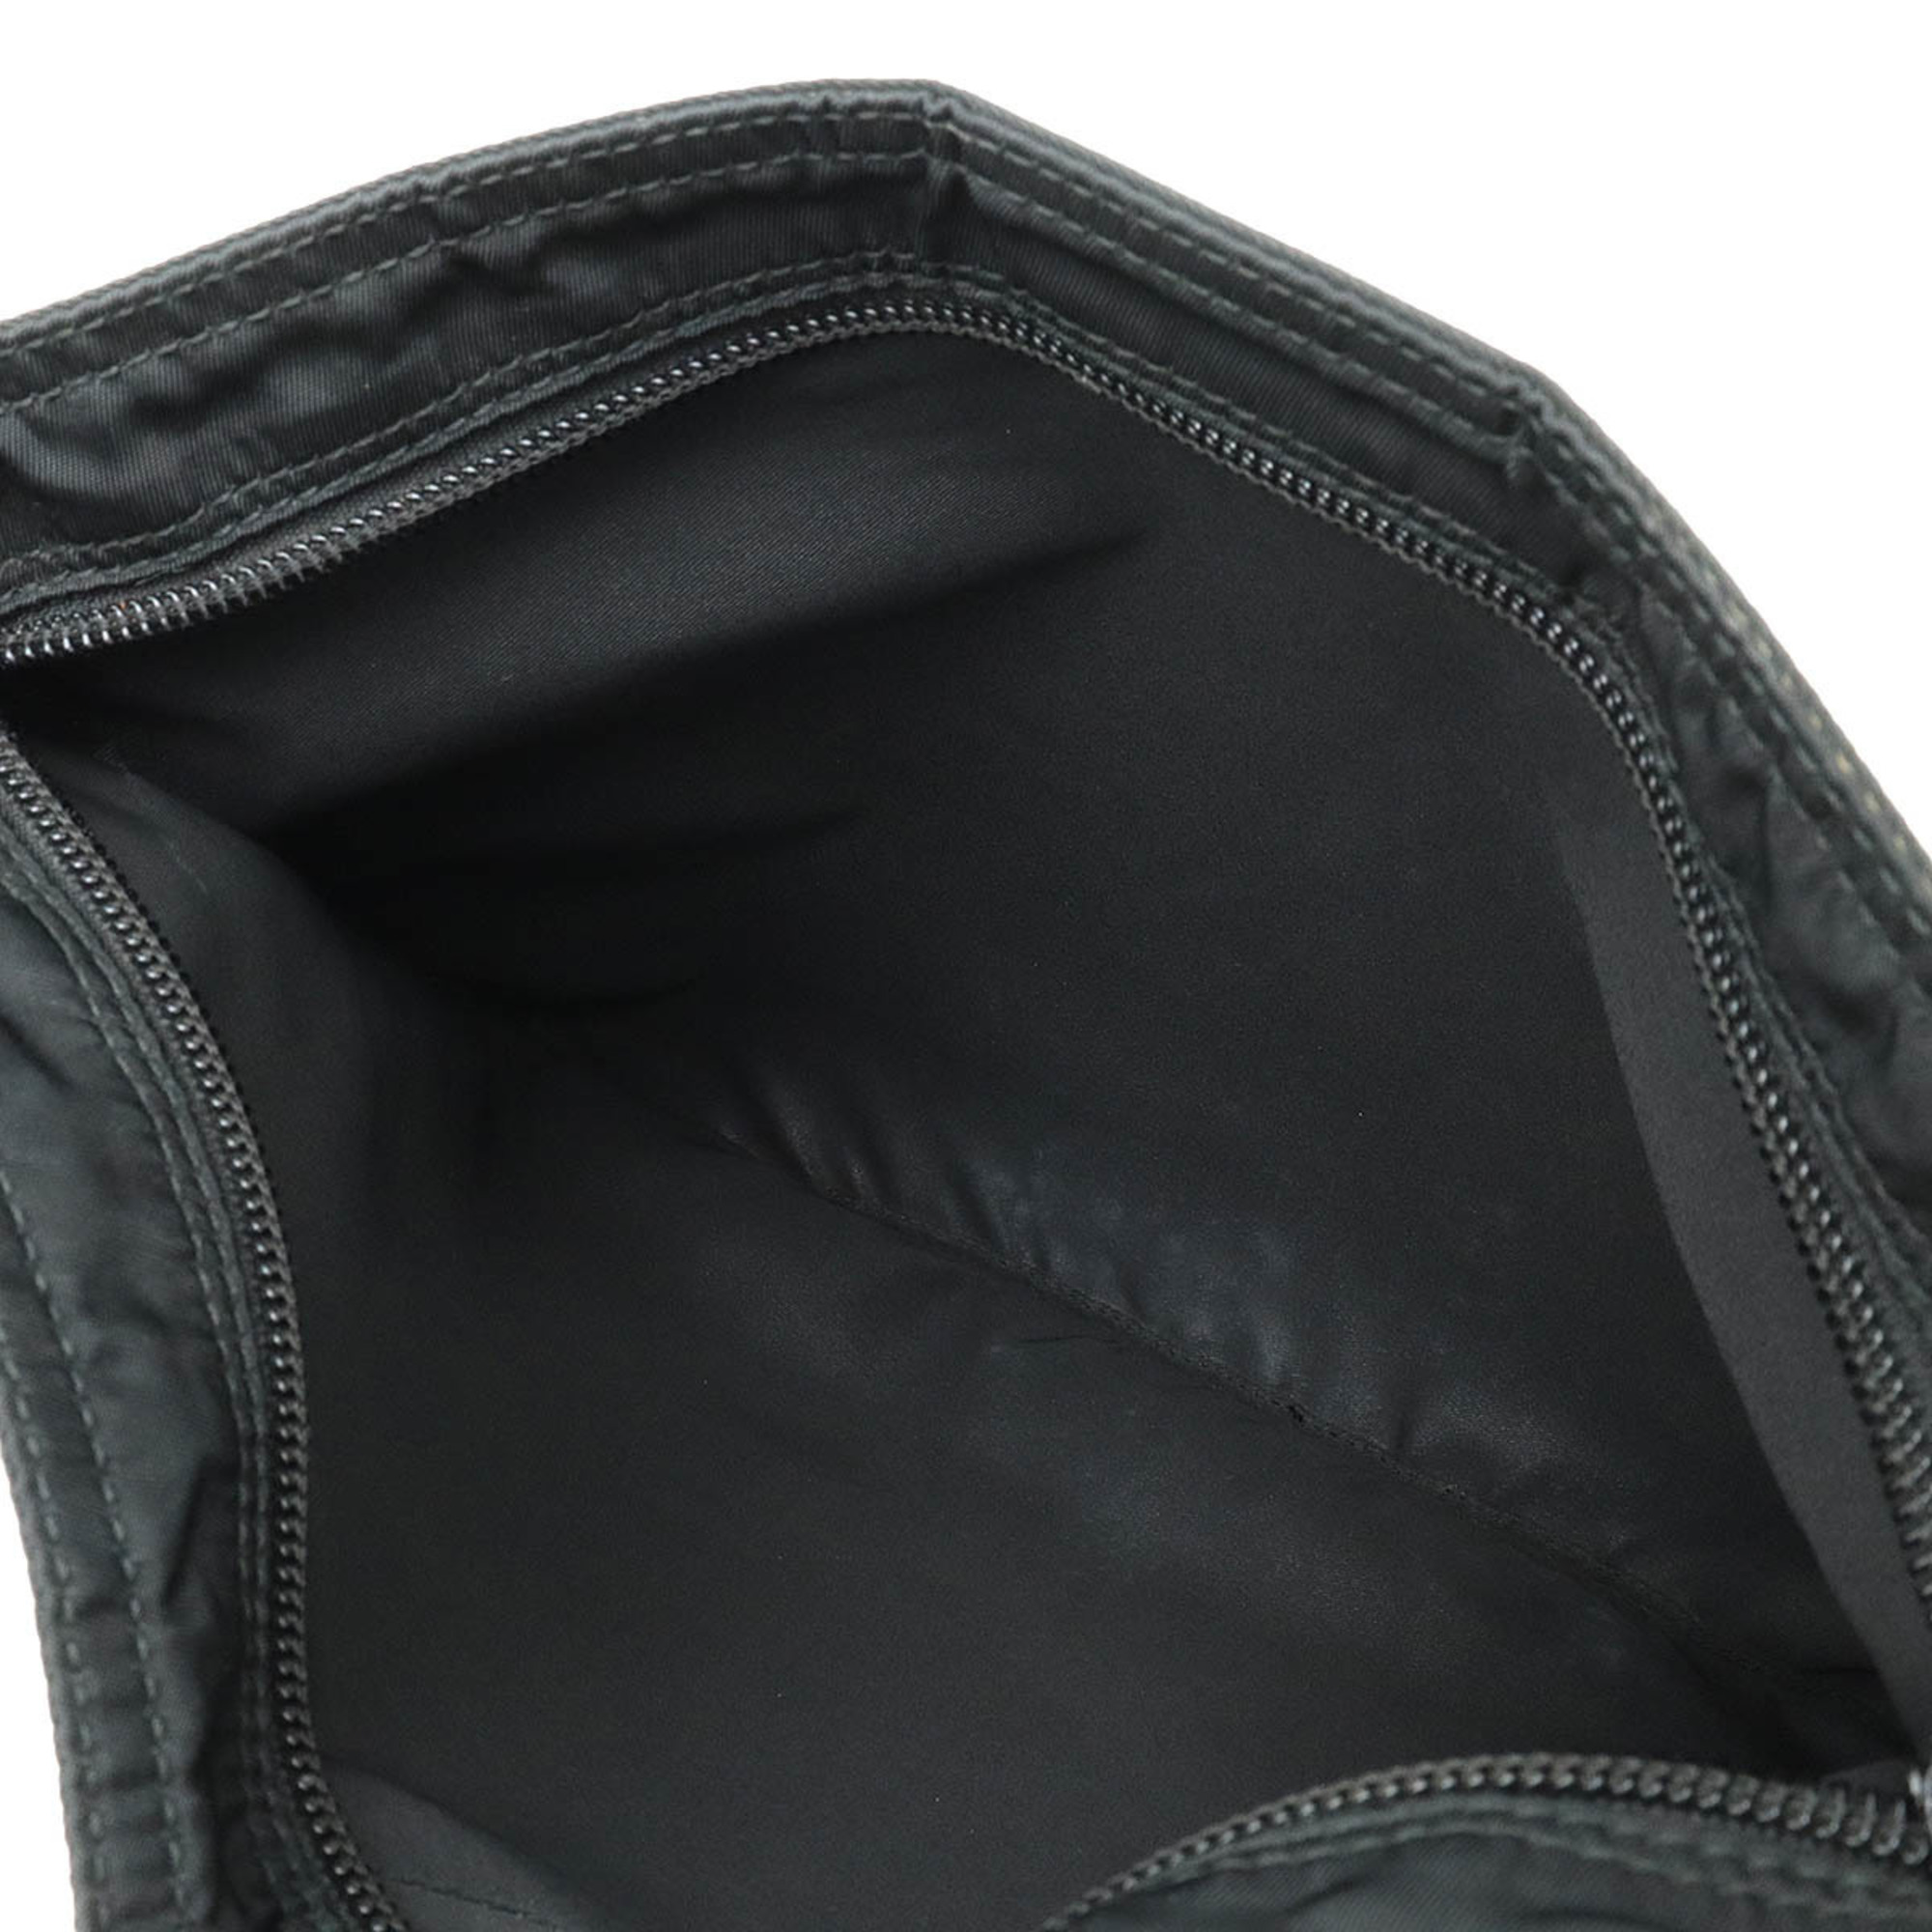 PRADA Prada shoulder bag nylon leather NERO black B7338